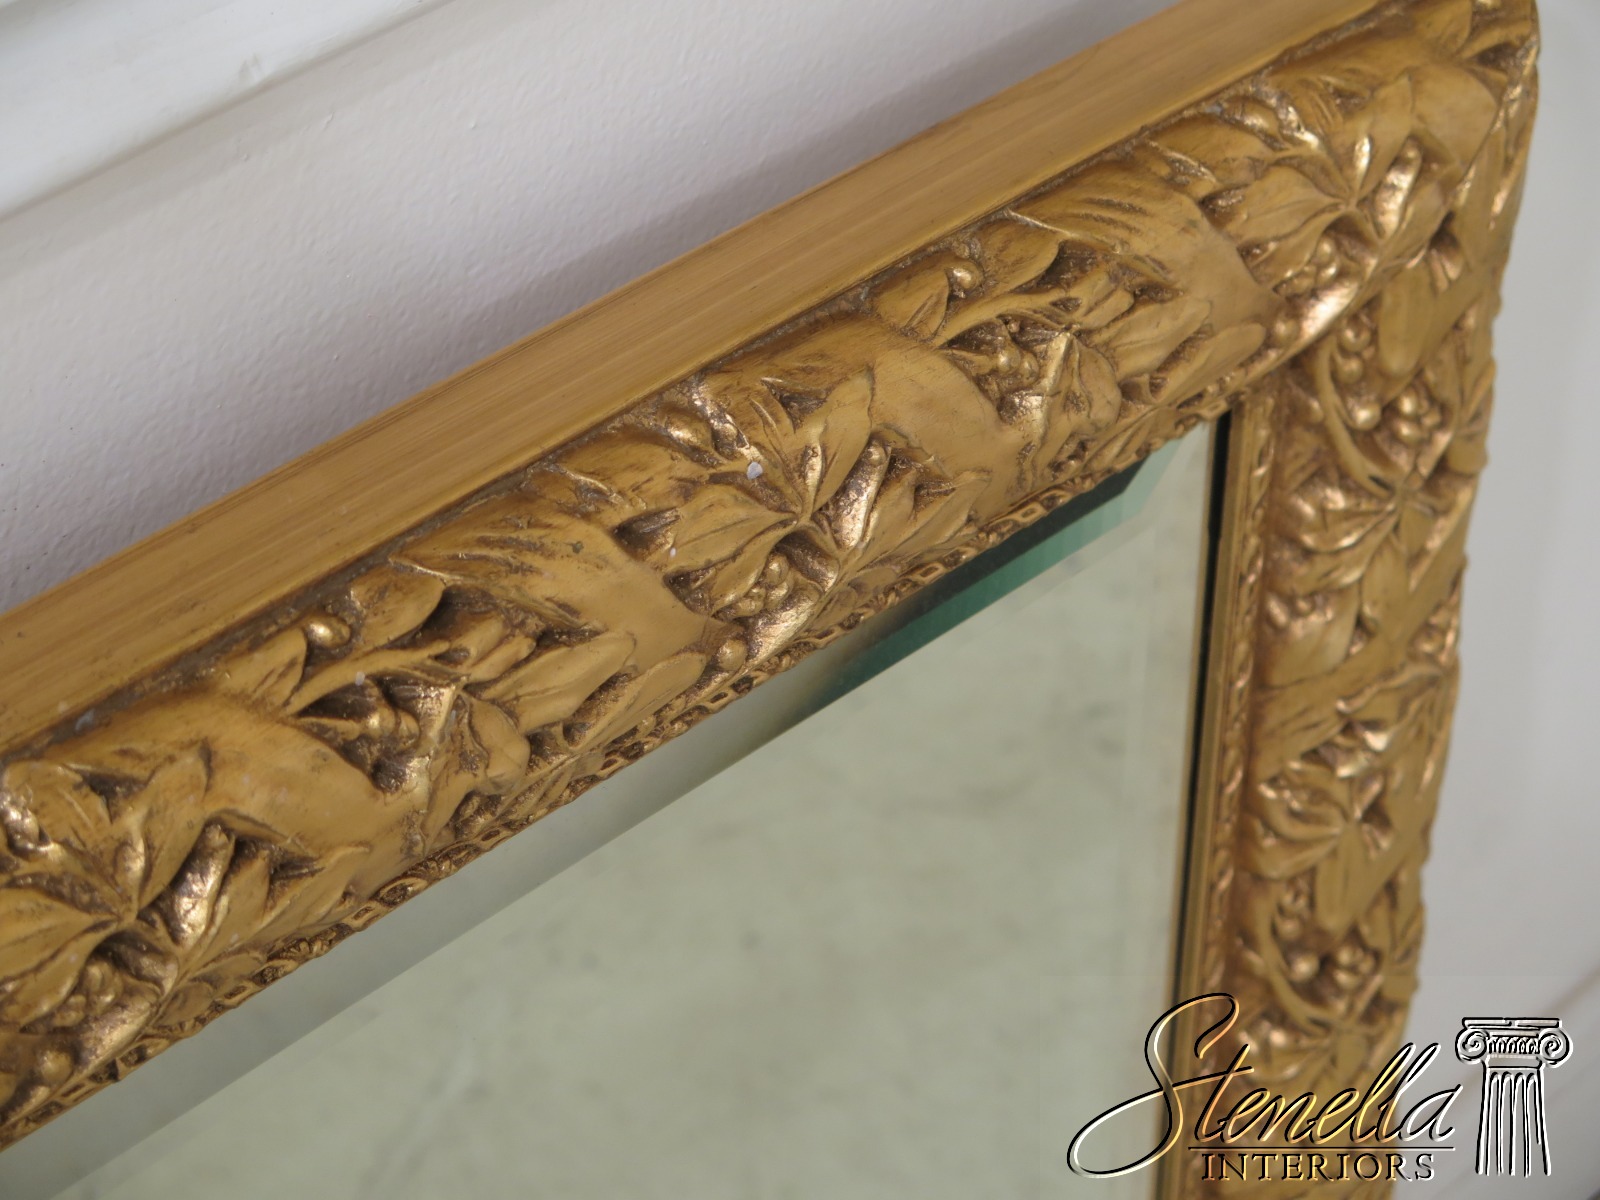 31187ec Ornate Gold Decorated Rectangular Framed Beveled Mirror Ebay 